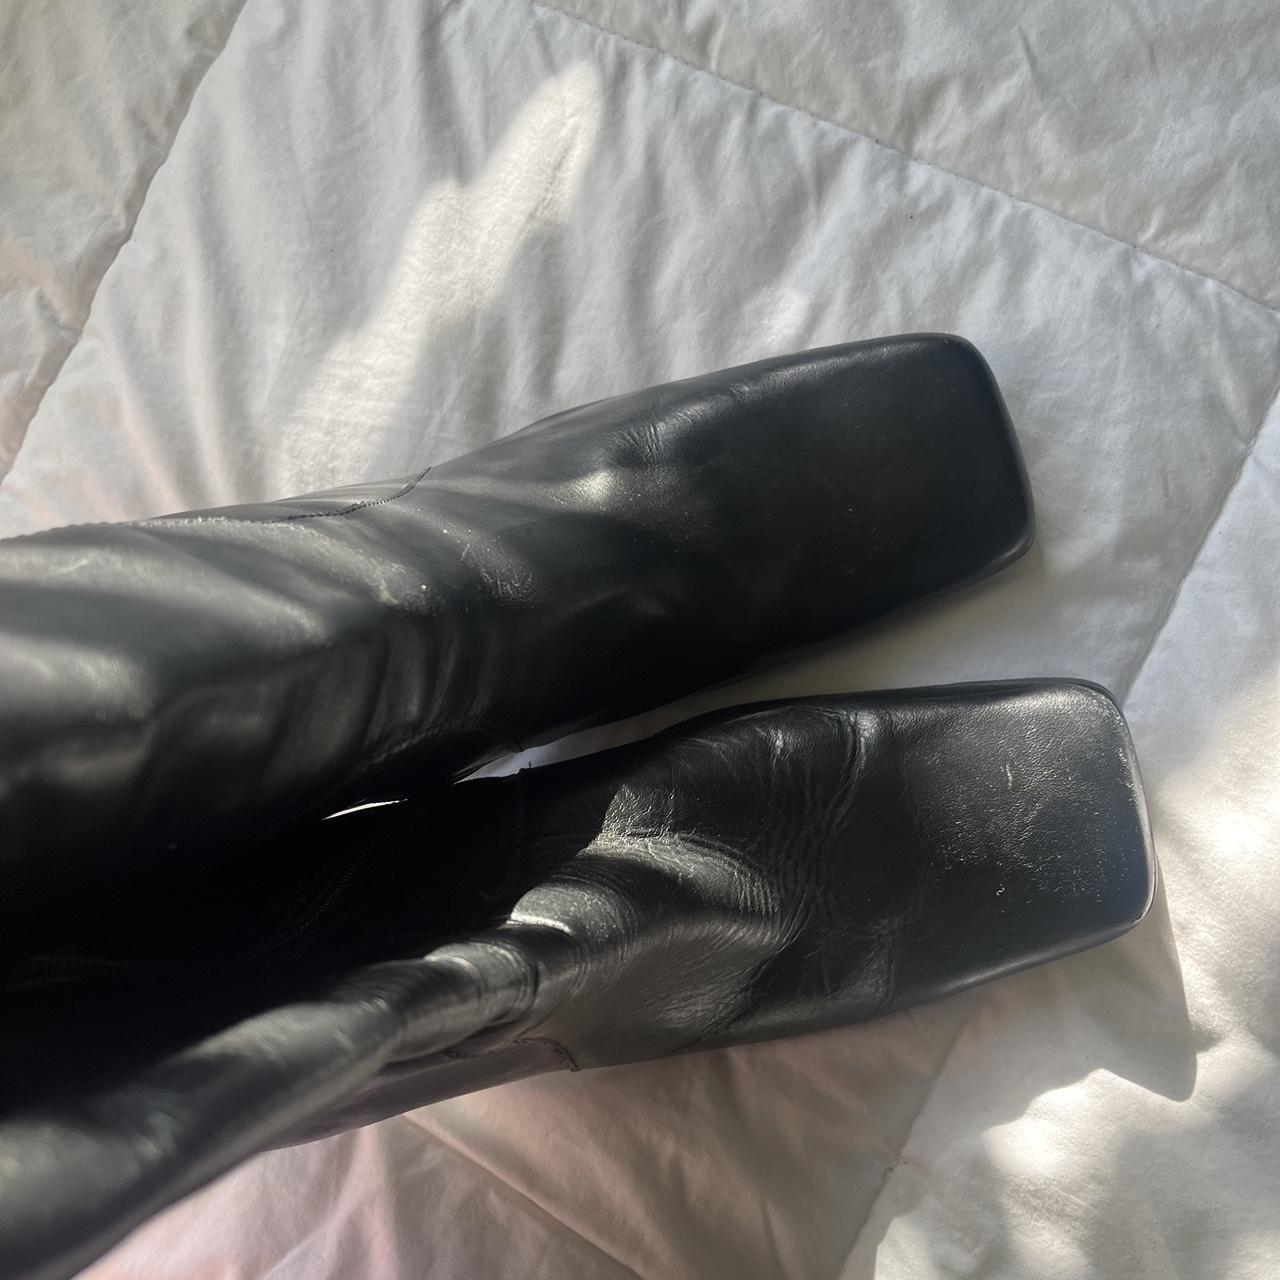 Women's Black Boots (4)